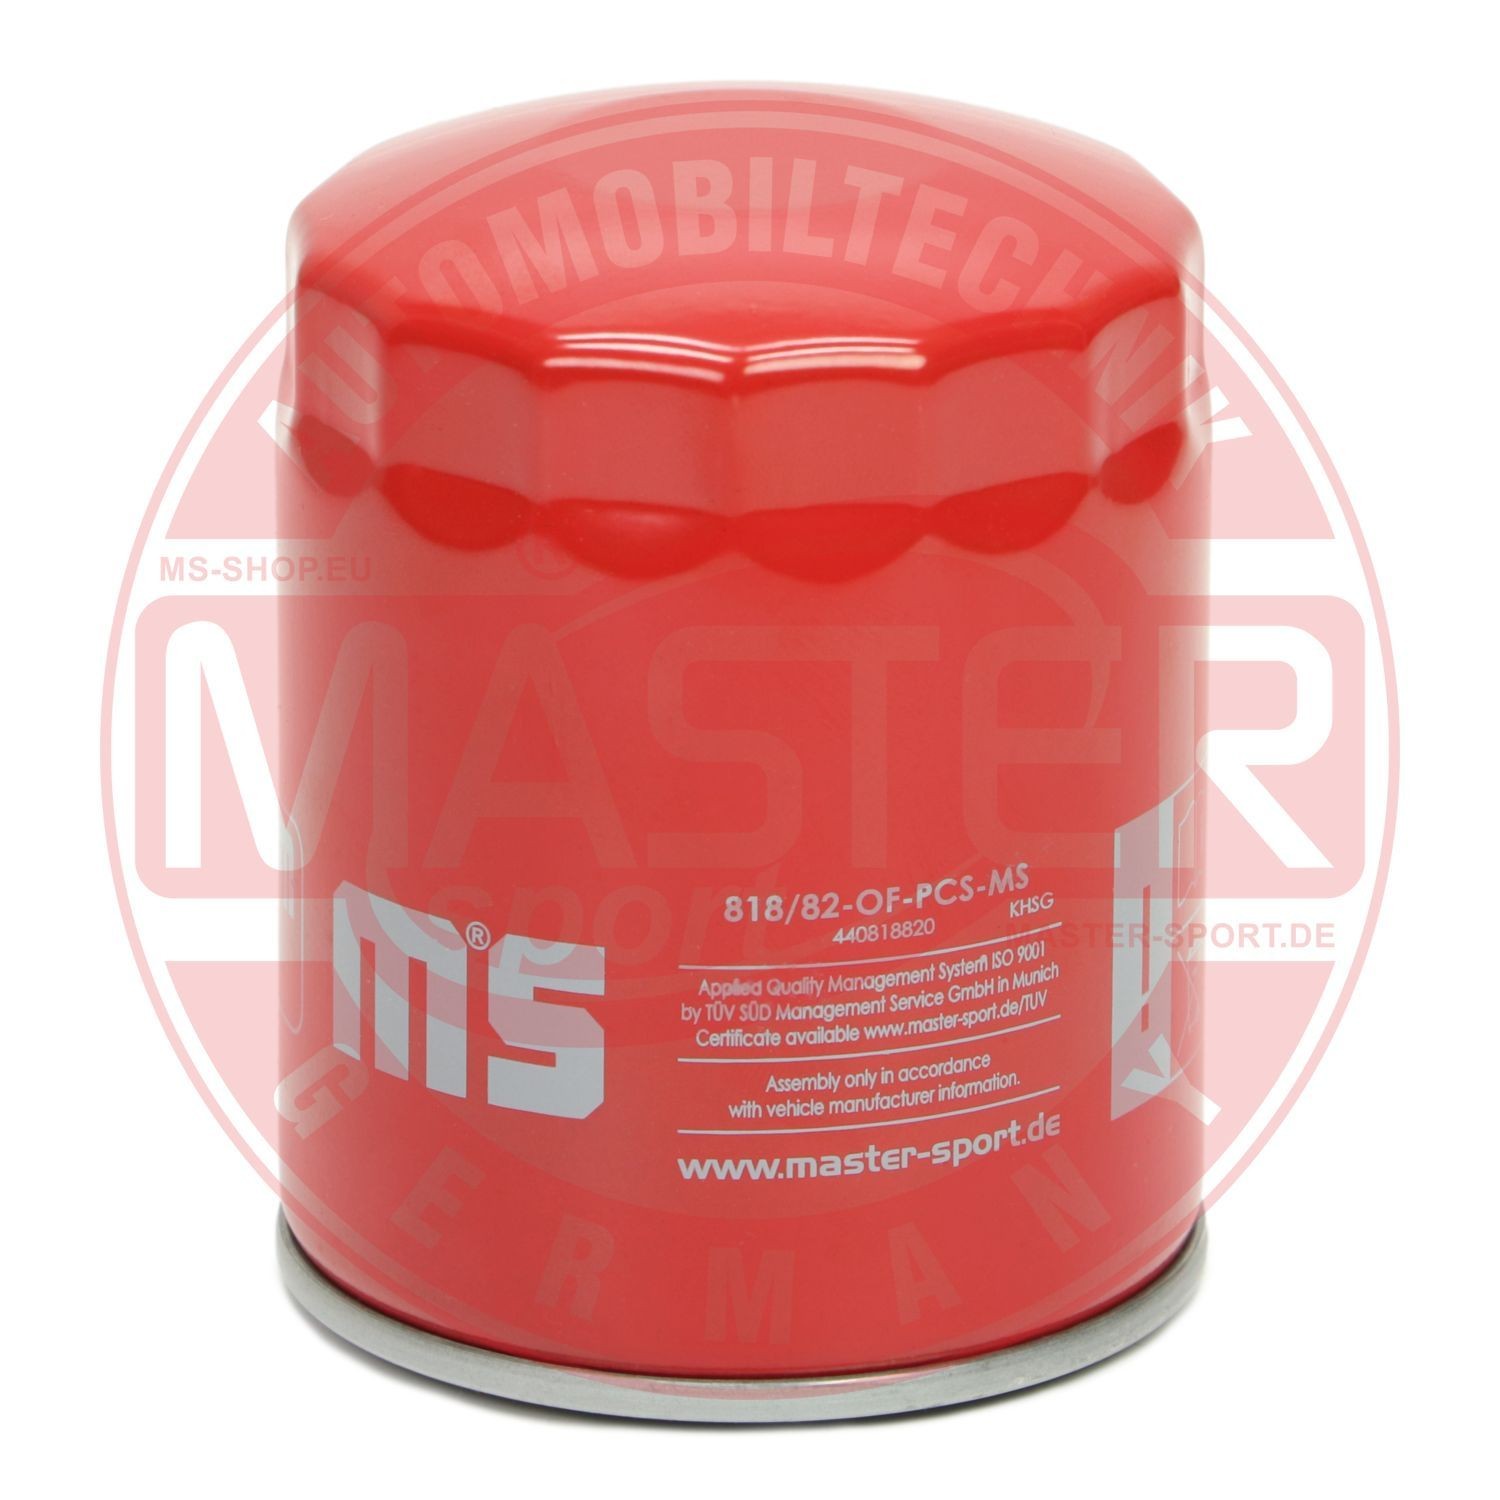 440818820 MASTER-SPORT 818/82-OF-PCS-MS Oil filter 15208-71J00